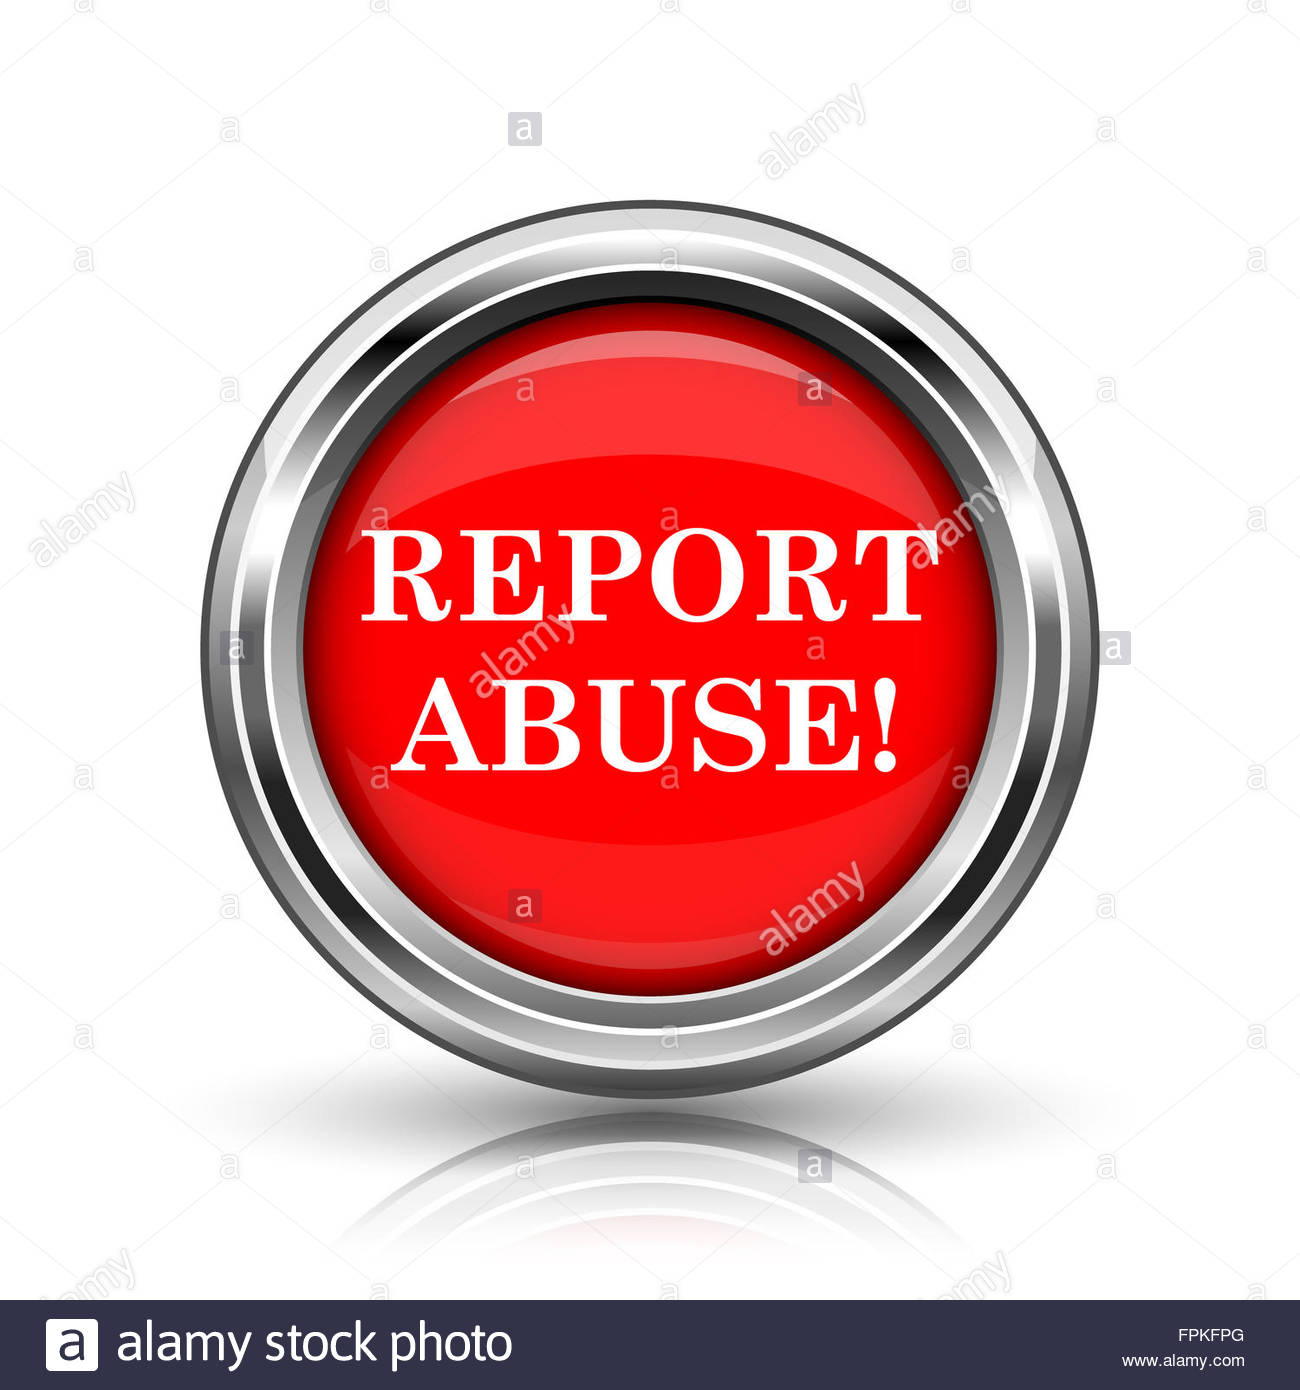 Report abuse icon  Stock Photo  valentint #25423289